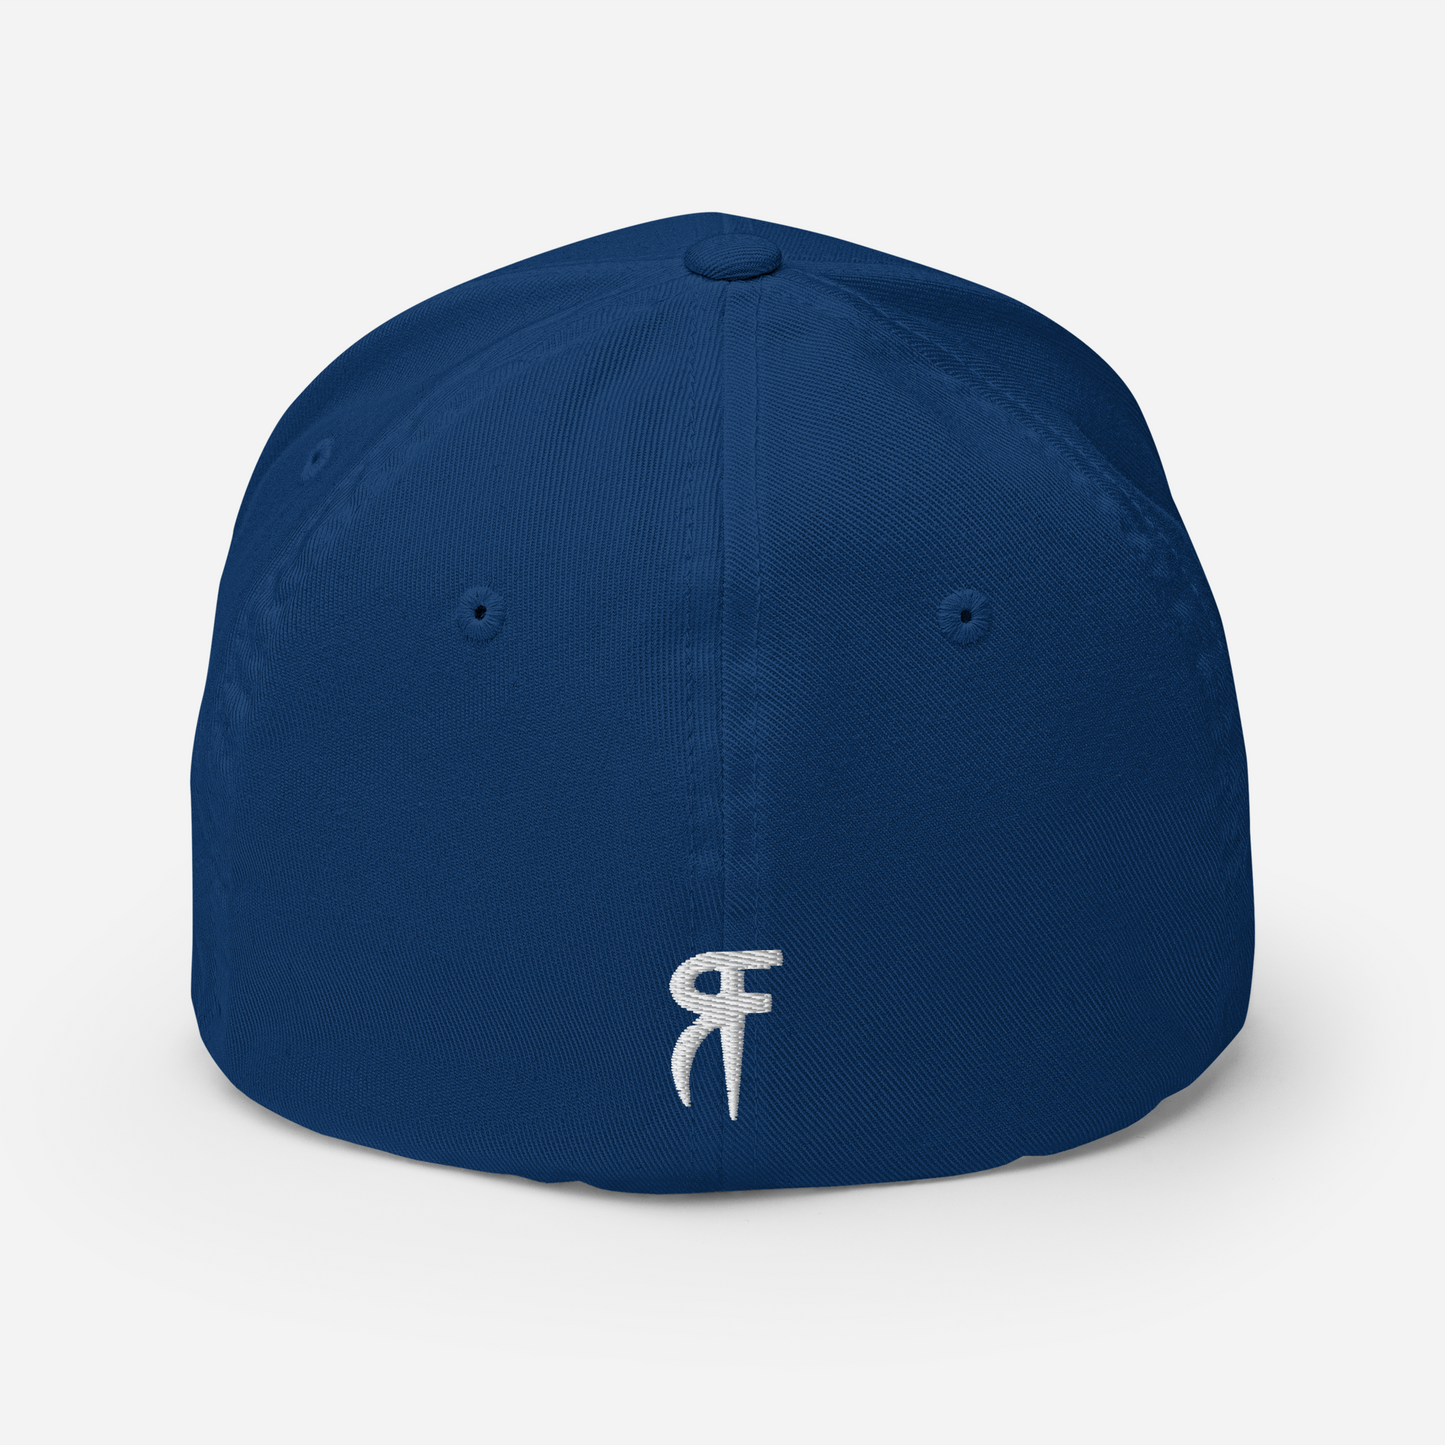 Ruck Fobocalls RF 2024 Hat